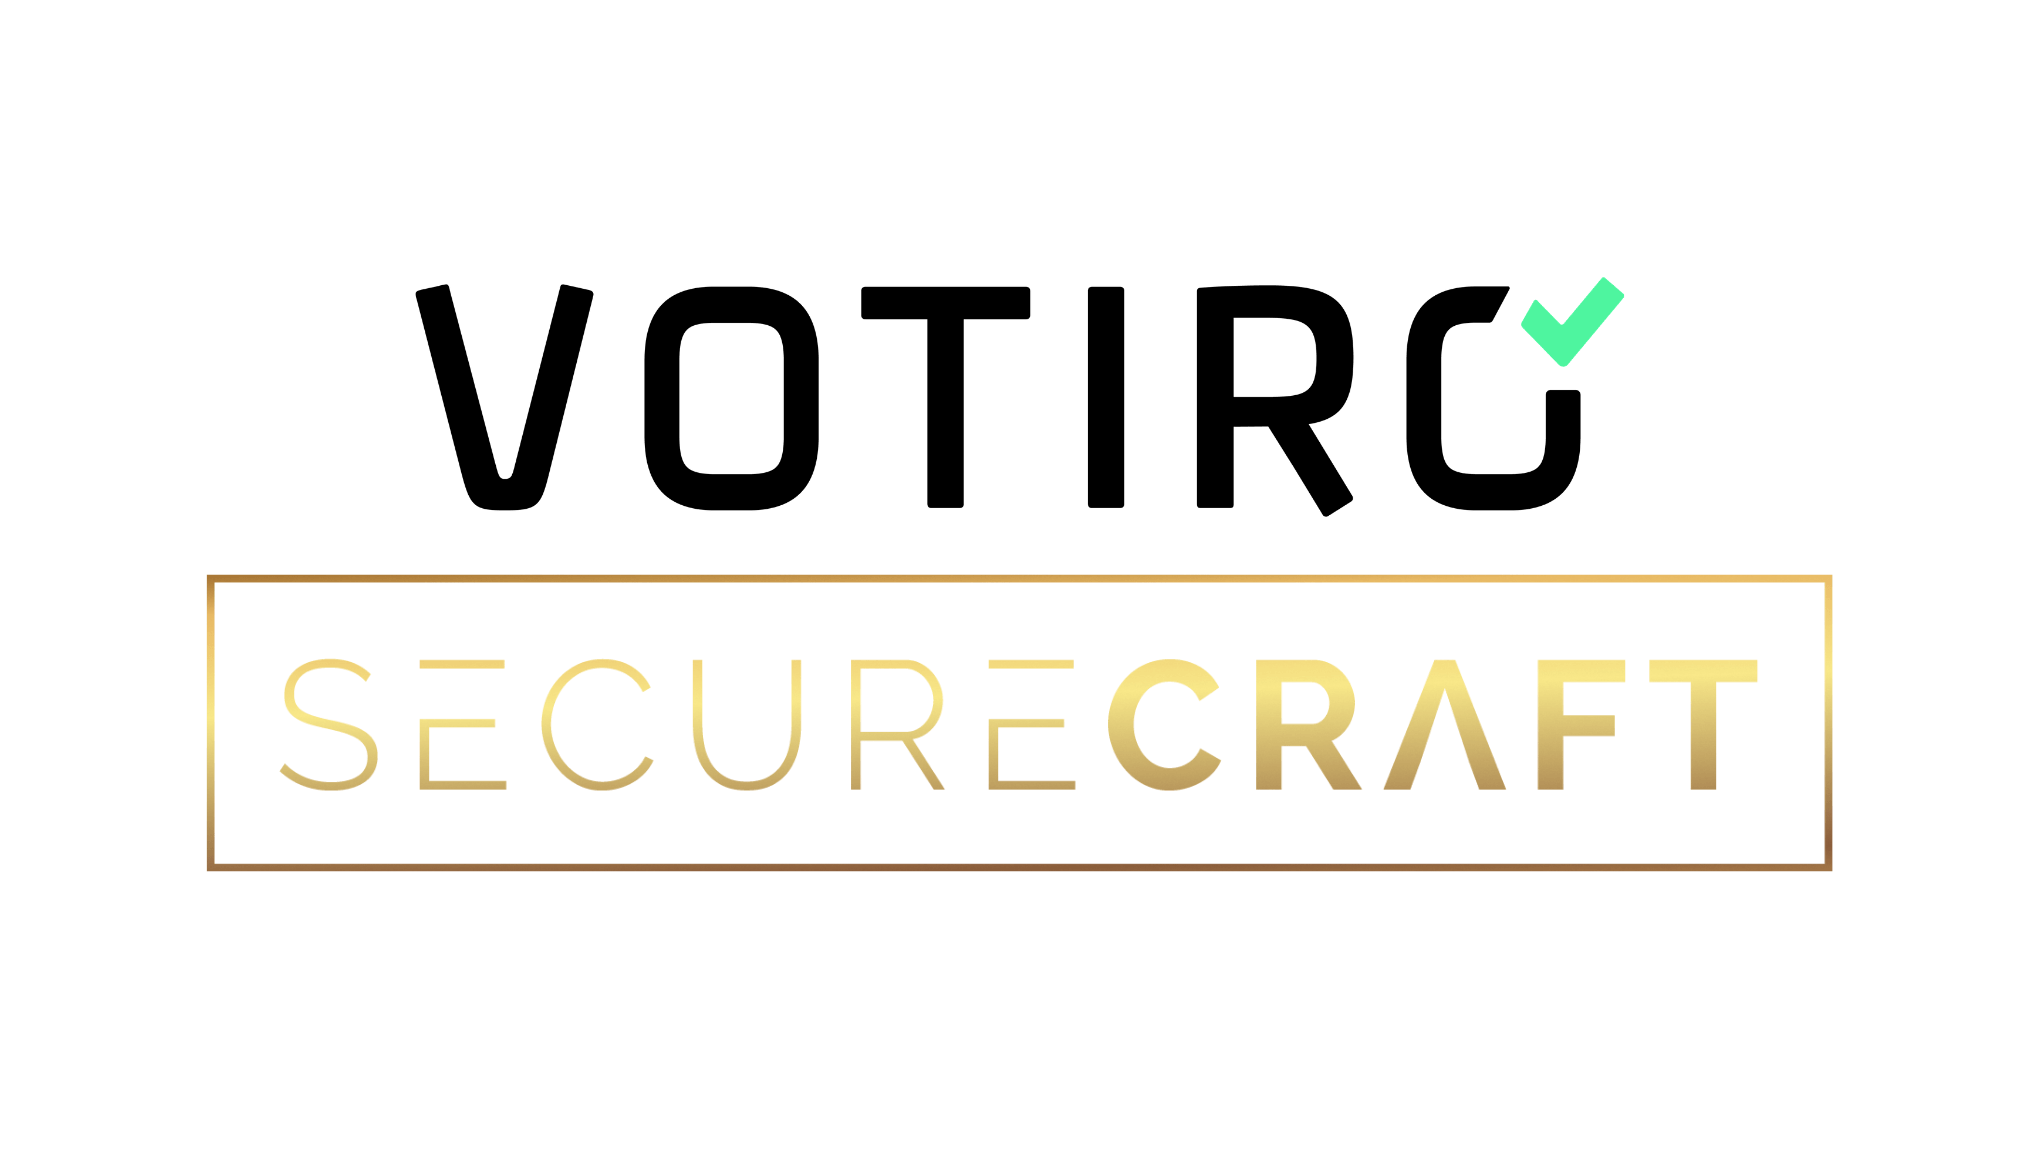 votiro and securecraft partnership logos on white background - Votiro